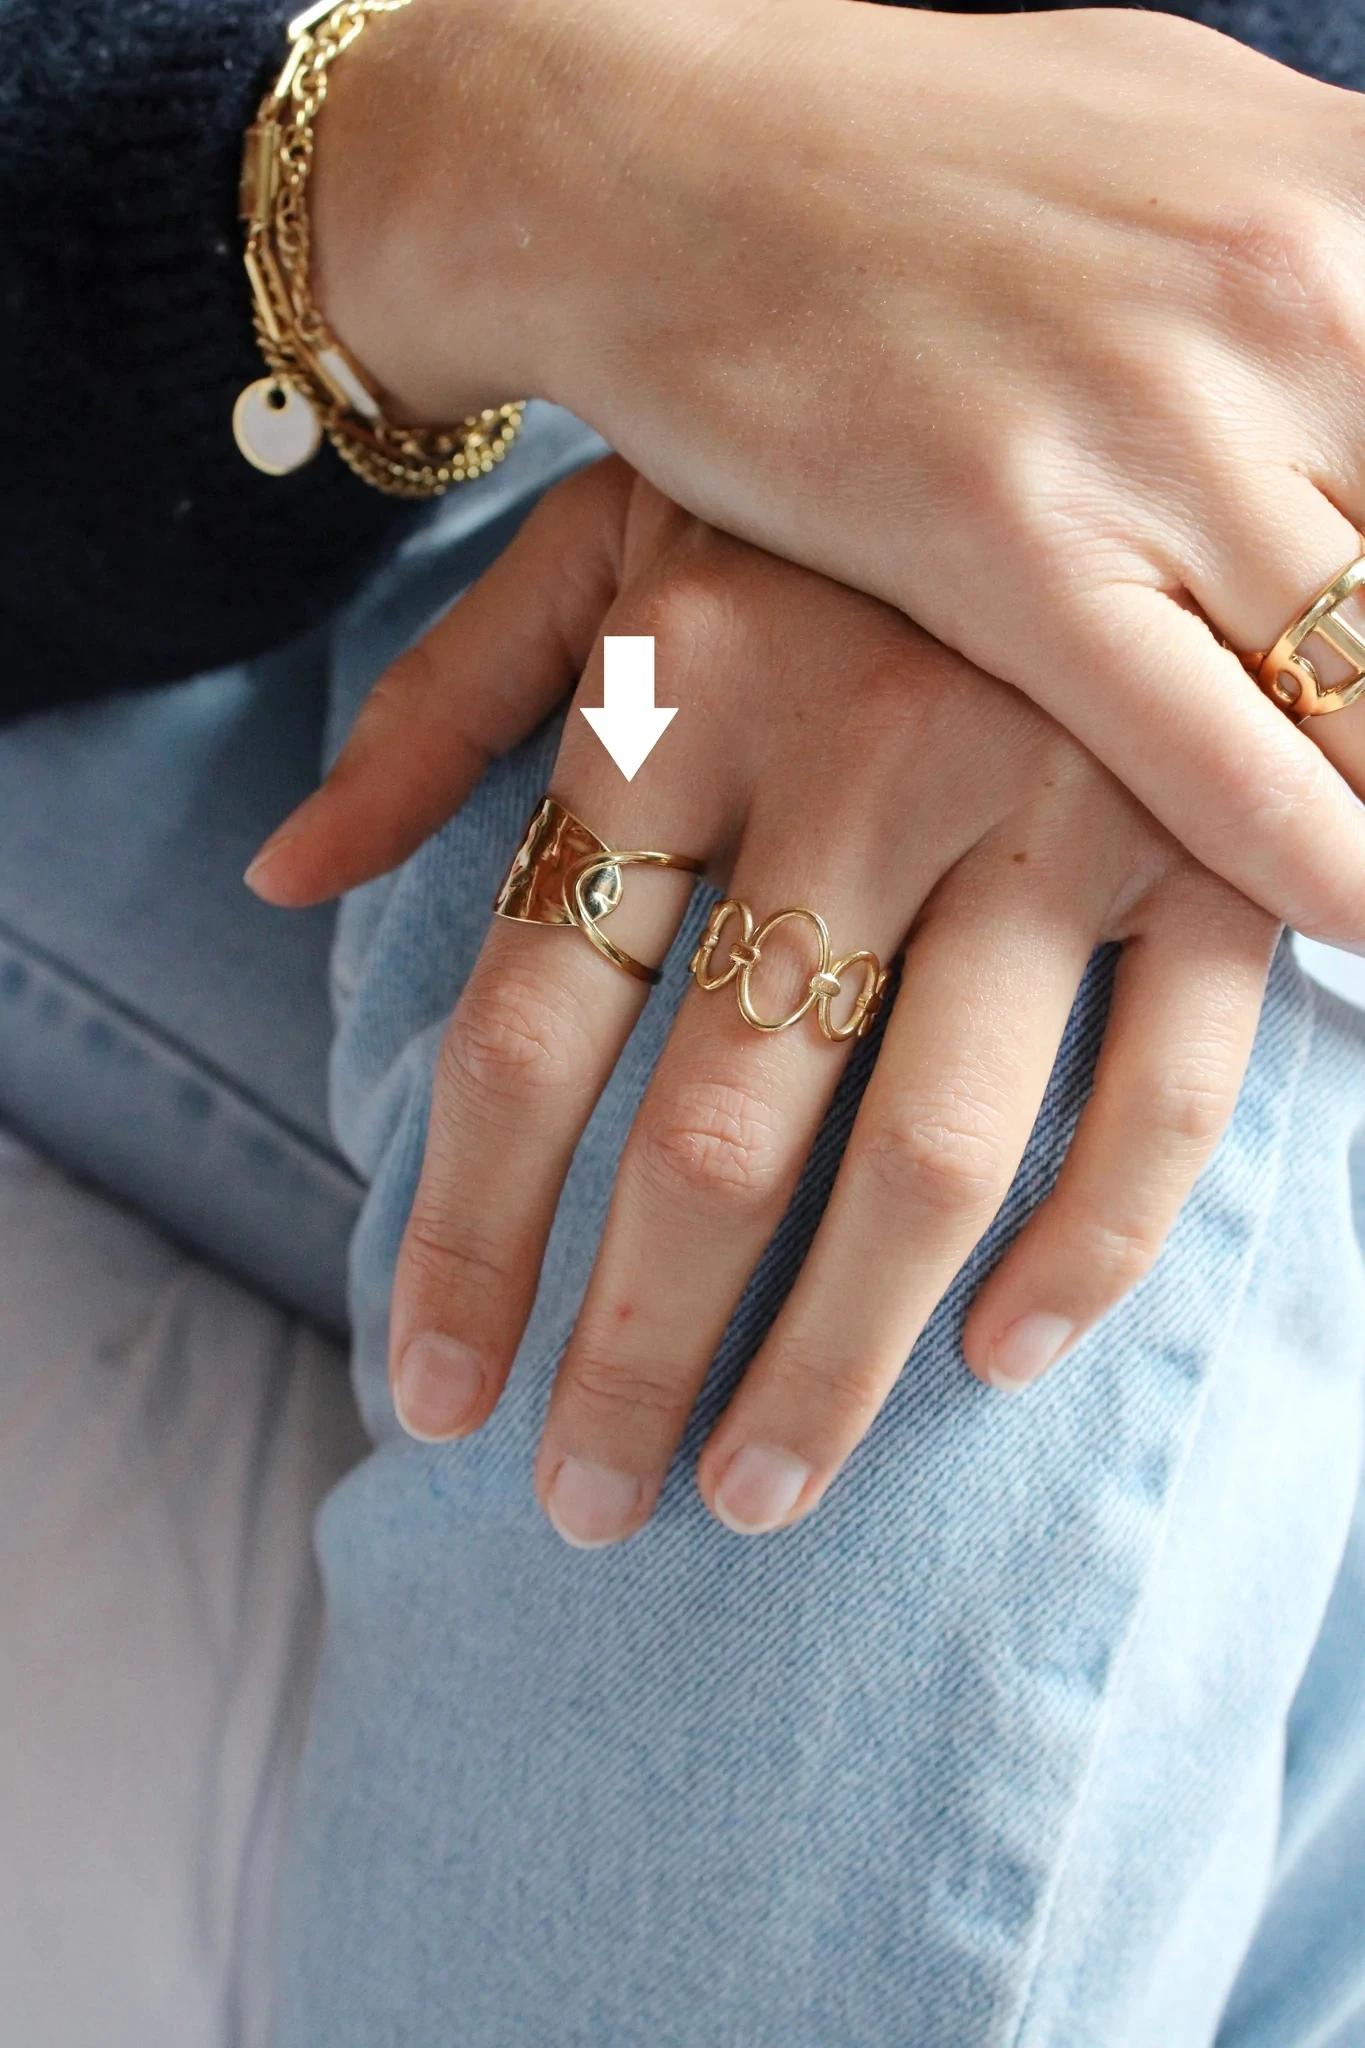 Youthway Minimalist Geometric Stainless Steel Finger Ring Waterproof Jewelry кольца для женщин Gift 4